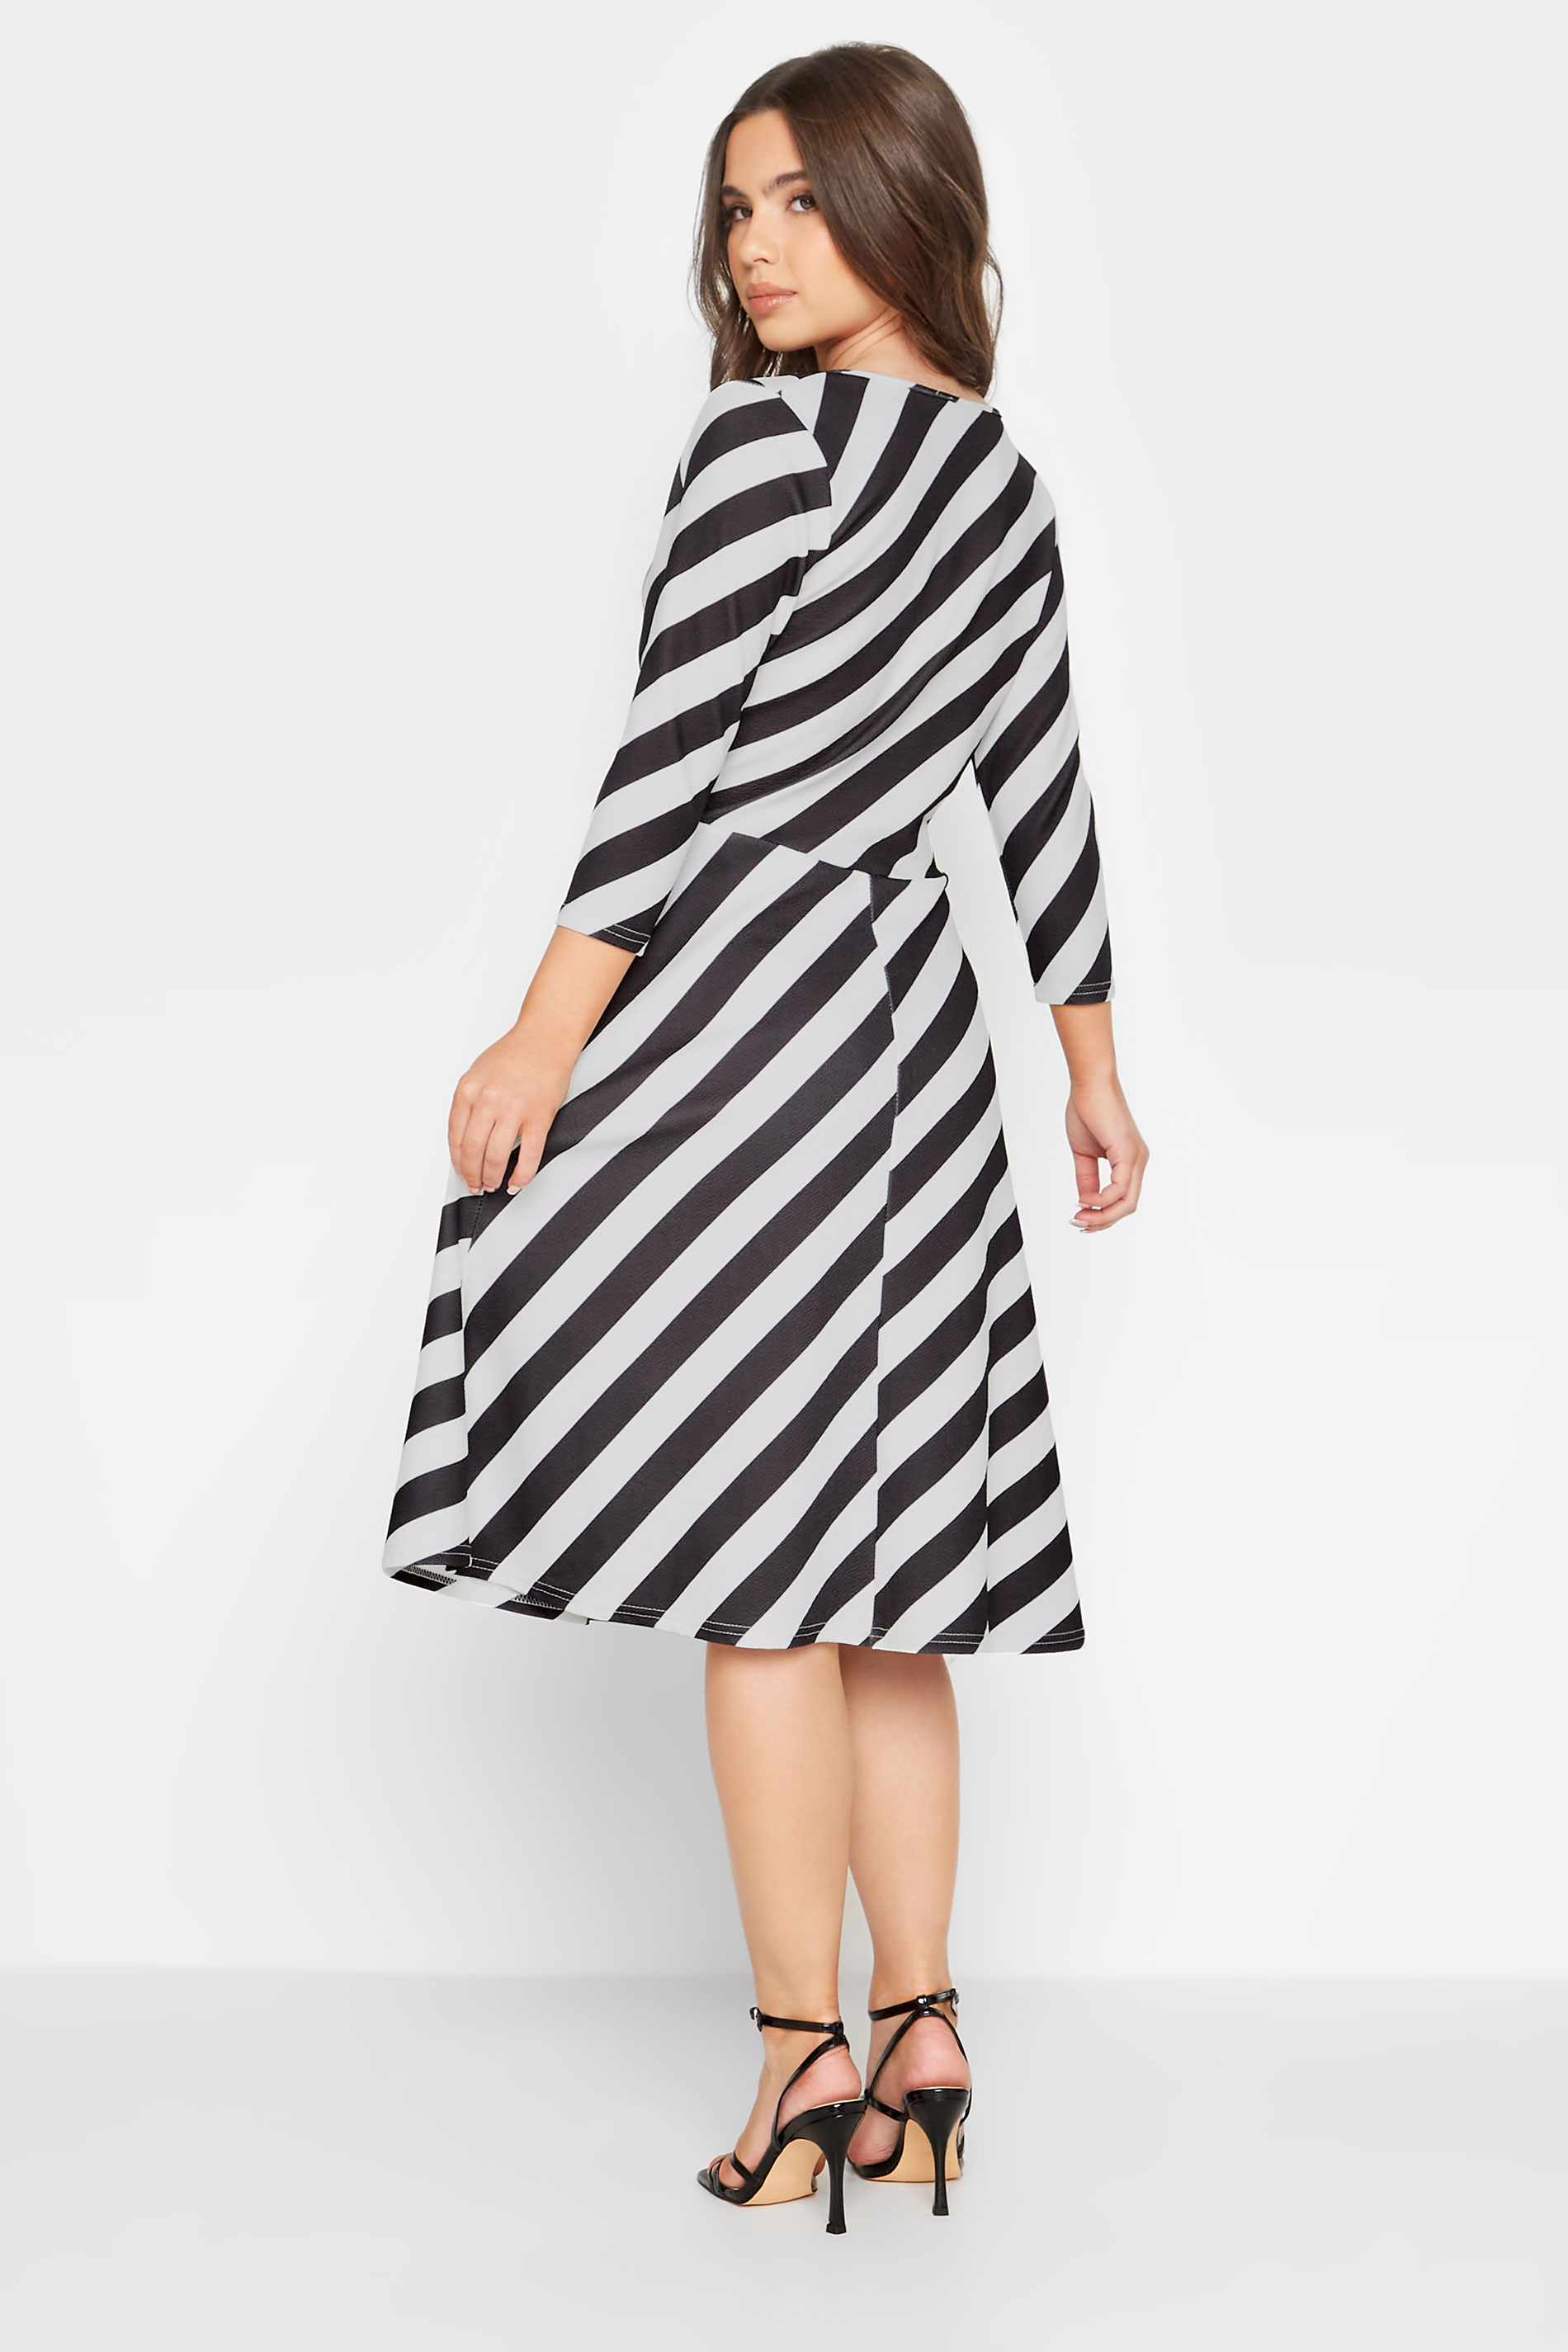 Petite Black & White Stripe Wrap Dress | PixieGirl 3